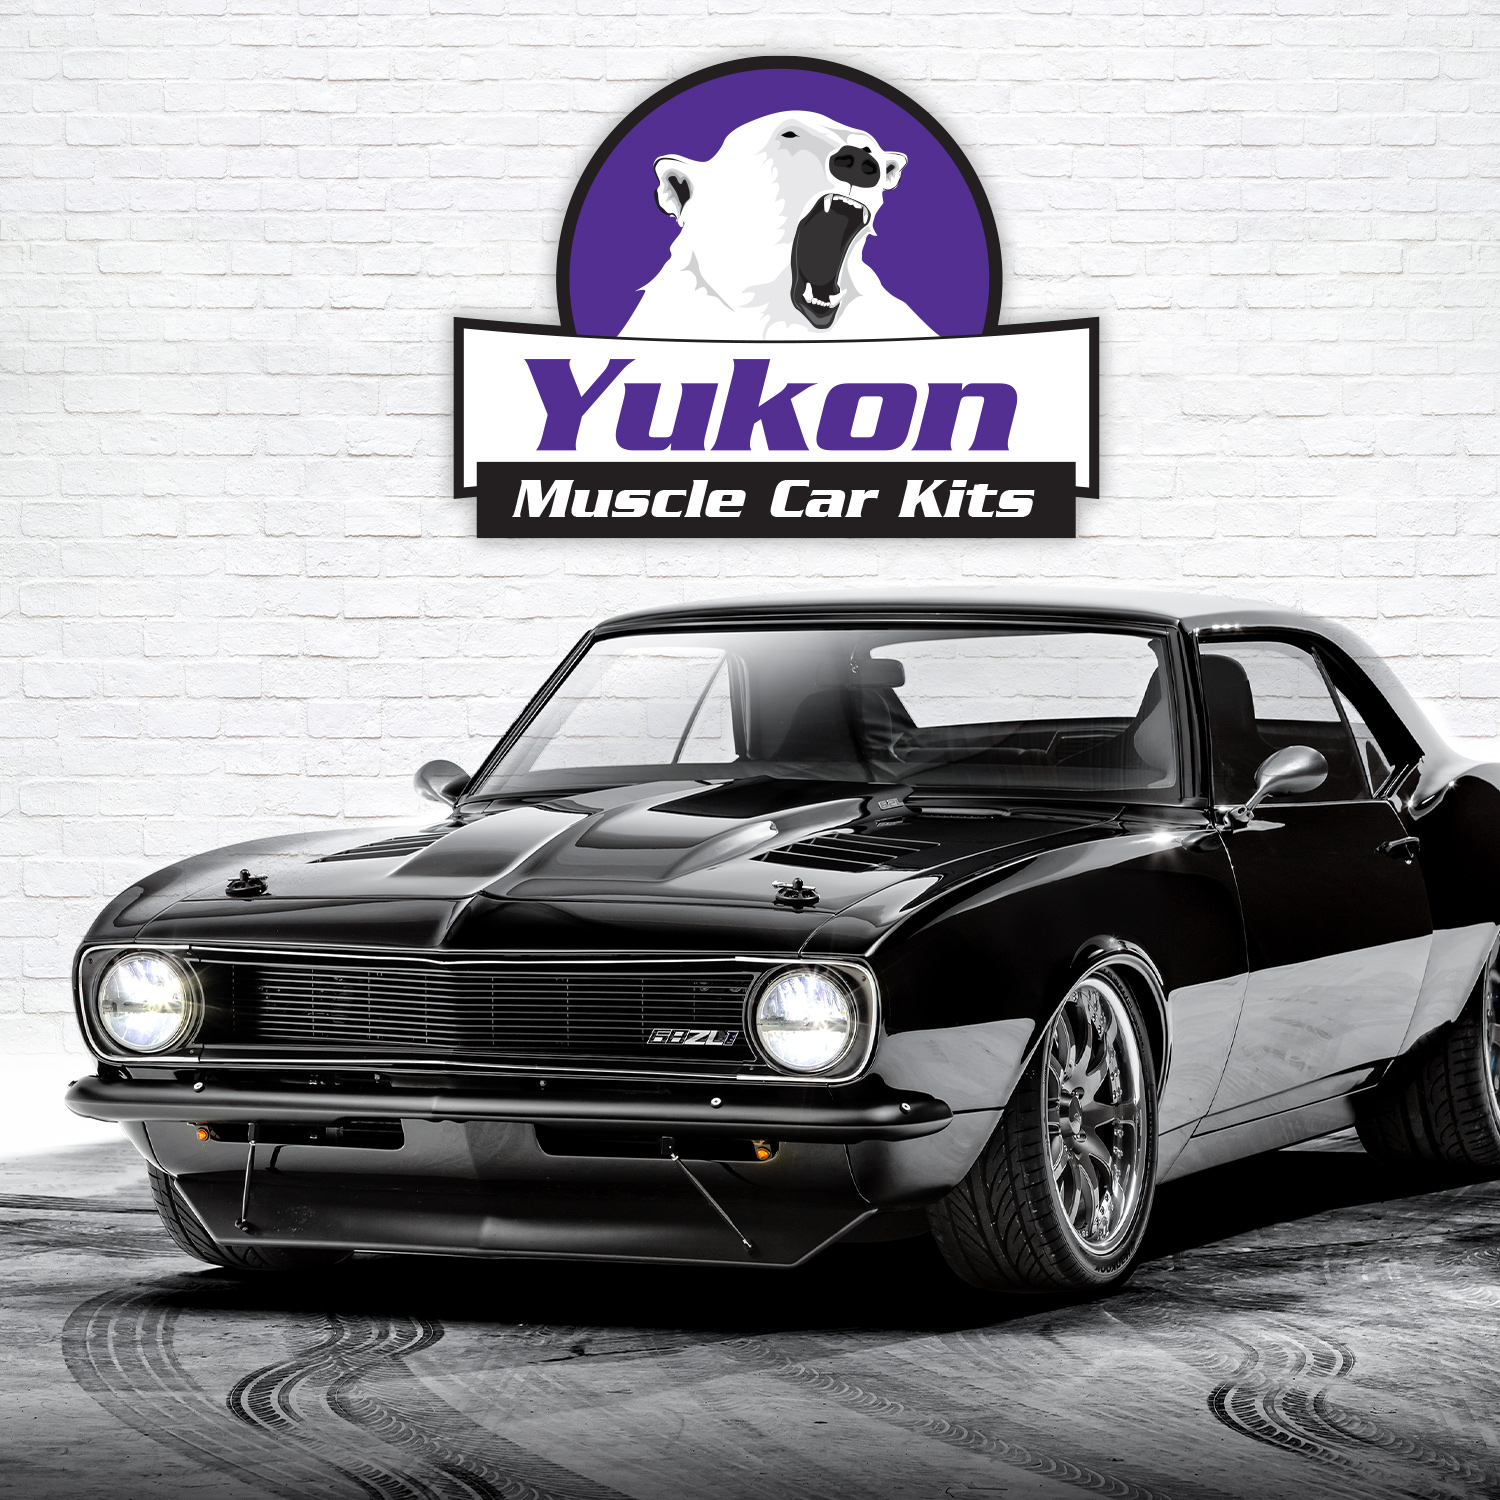 Yukon Muscle Car Re-Gear Kit for Chrysler 8.75” diff, 29 spline, 3.73 ratio 